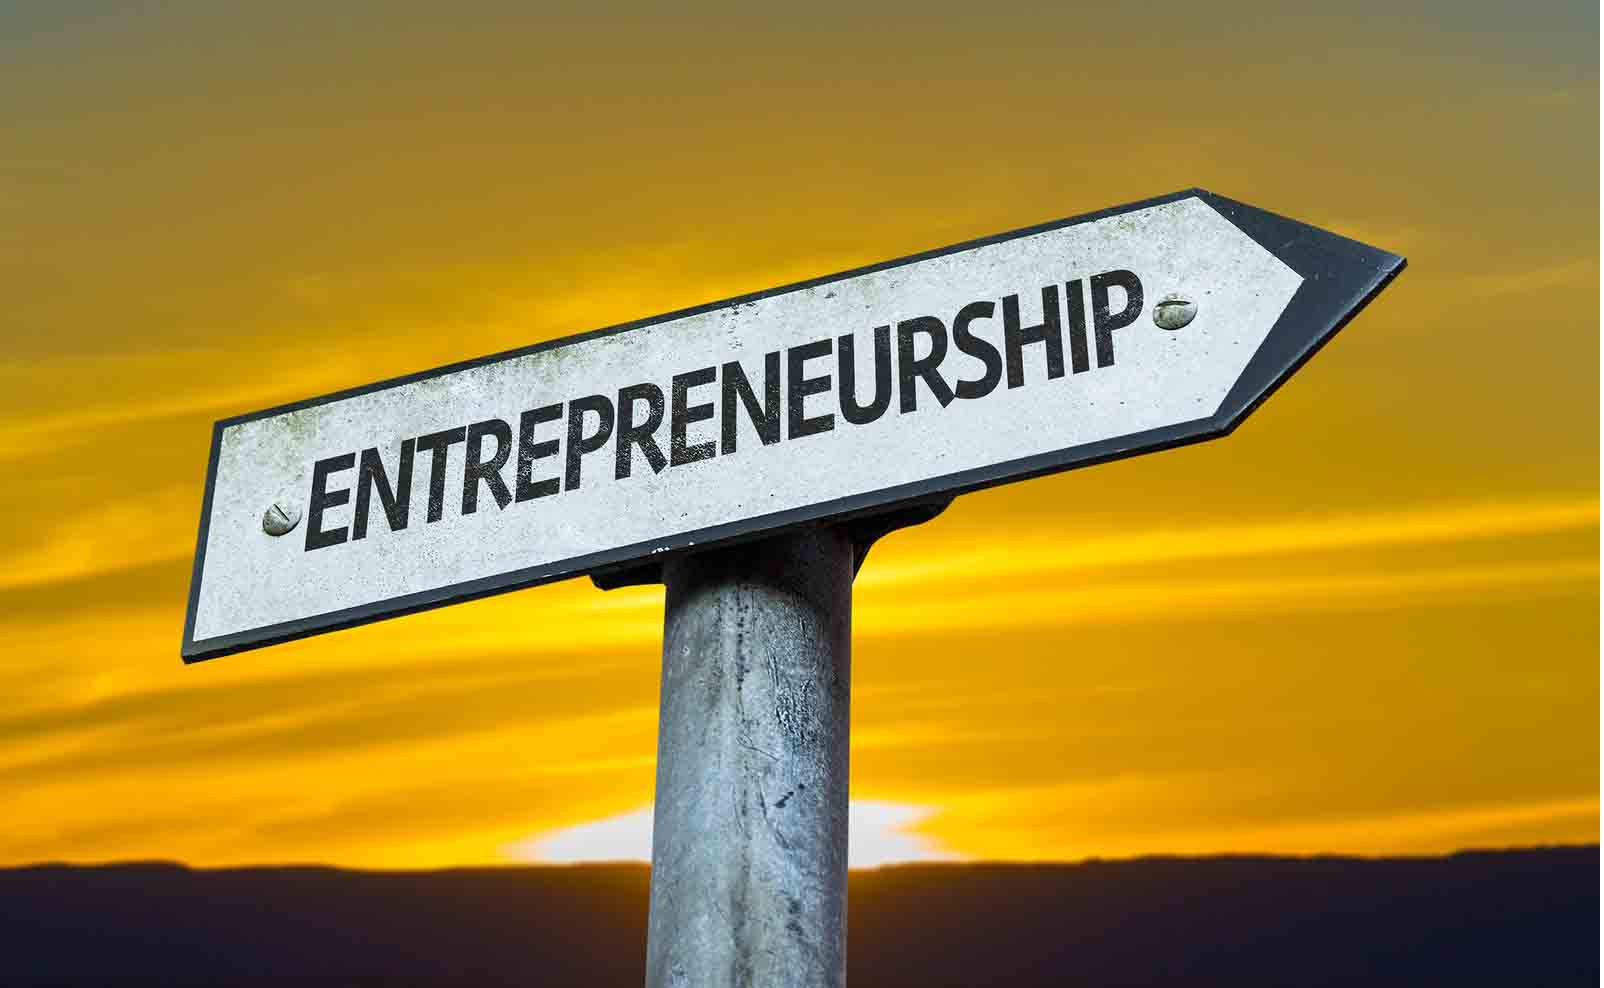 Entrepreneurship and Small Business Development